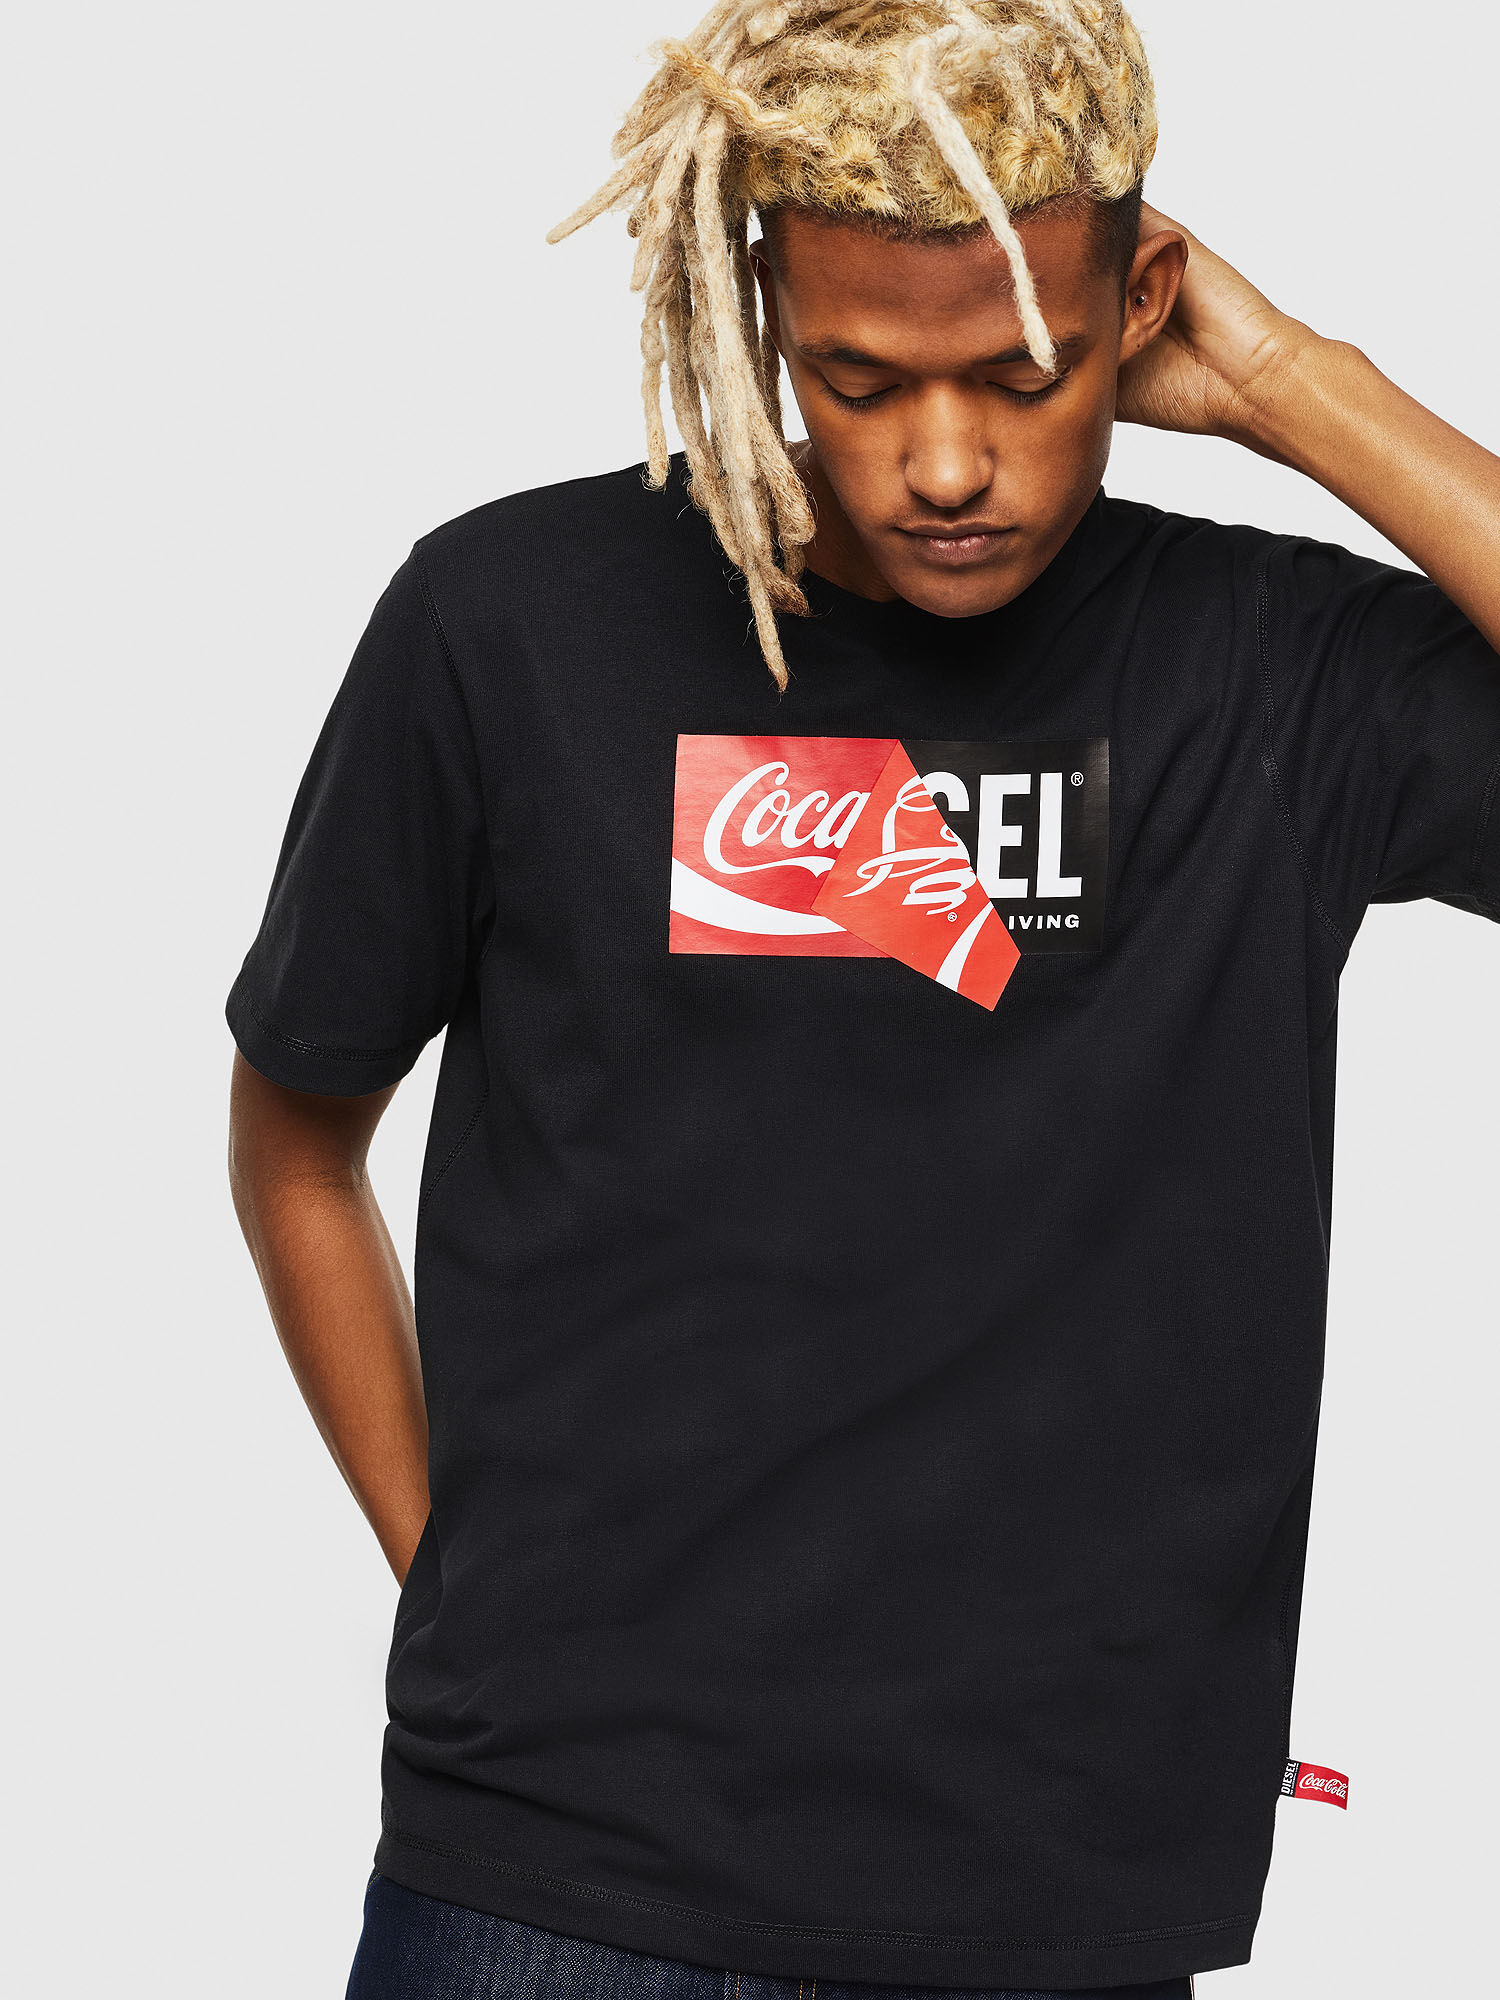 buy coca cola t shirt online india